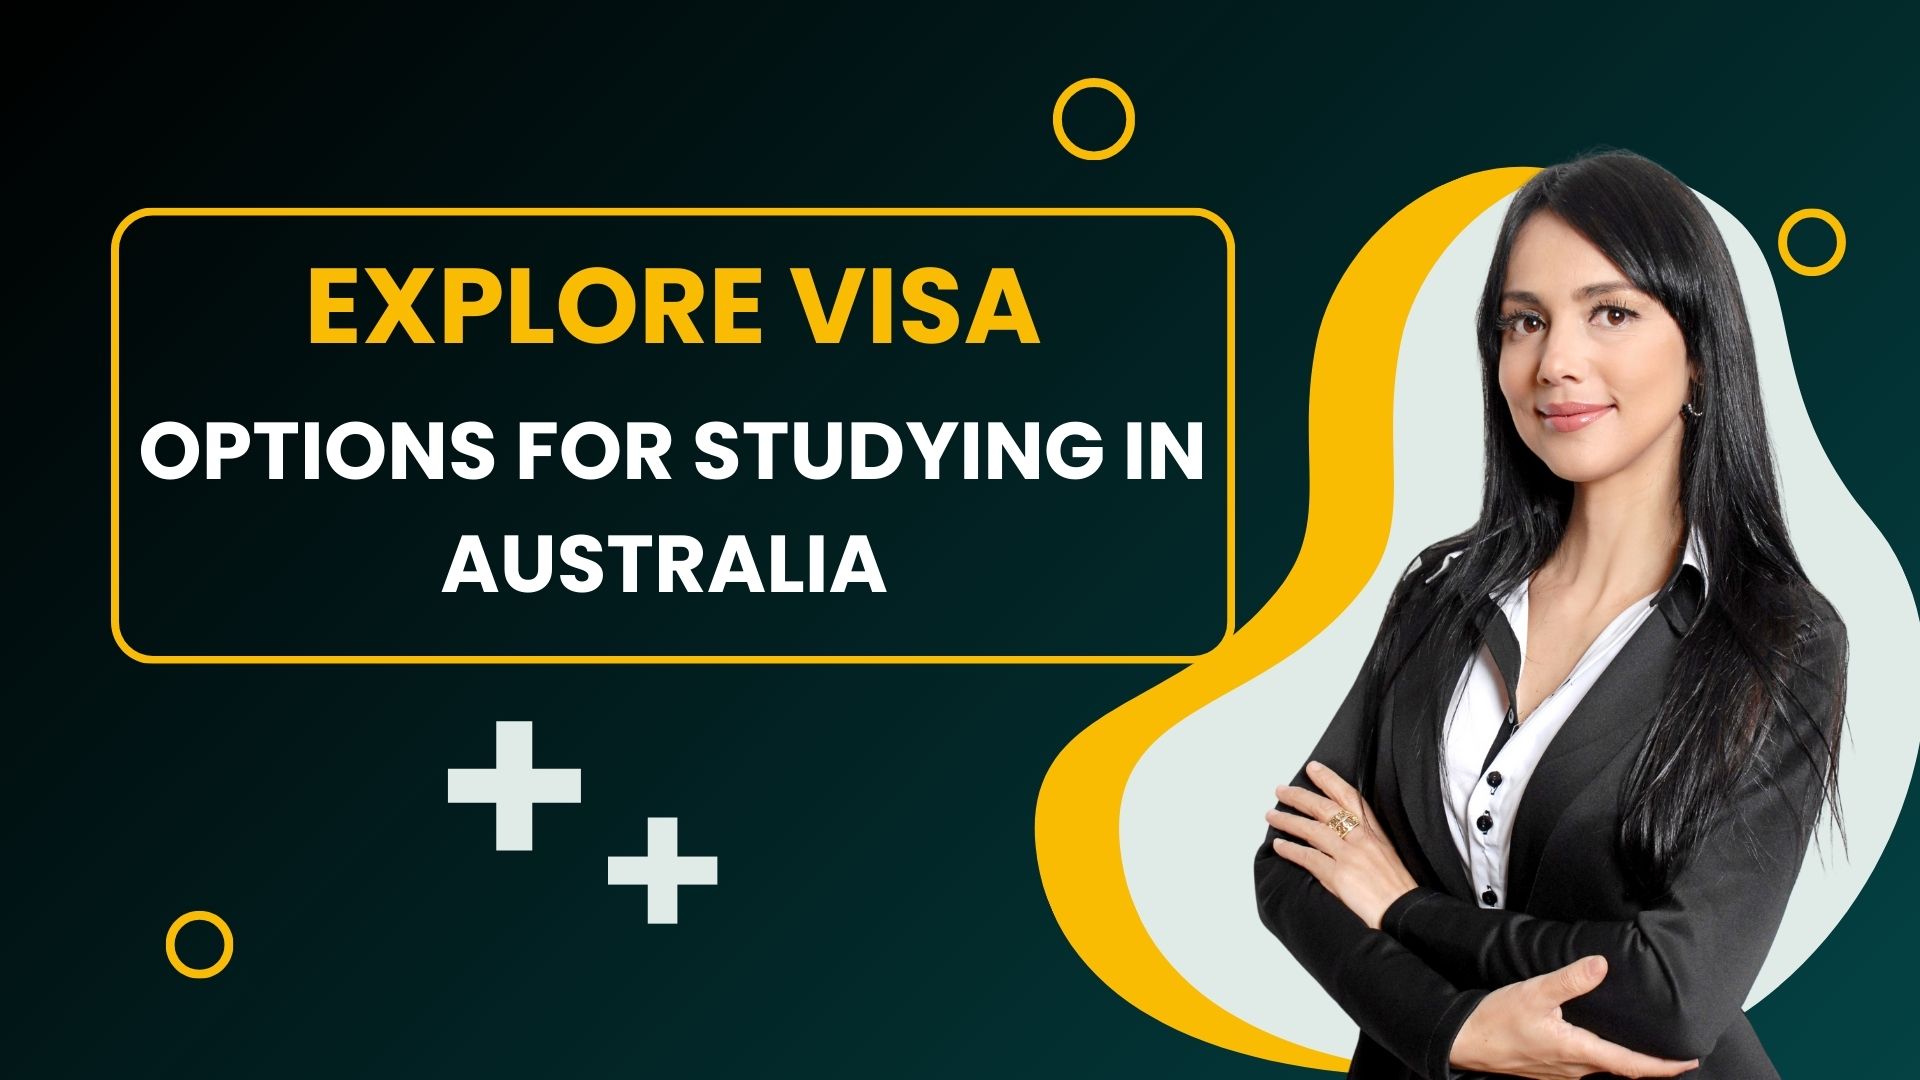 Explore visa options for studying in Australia